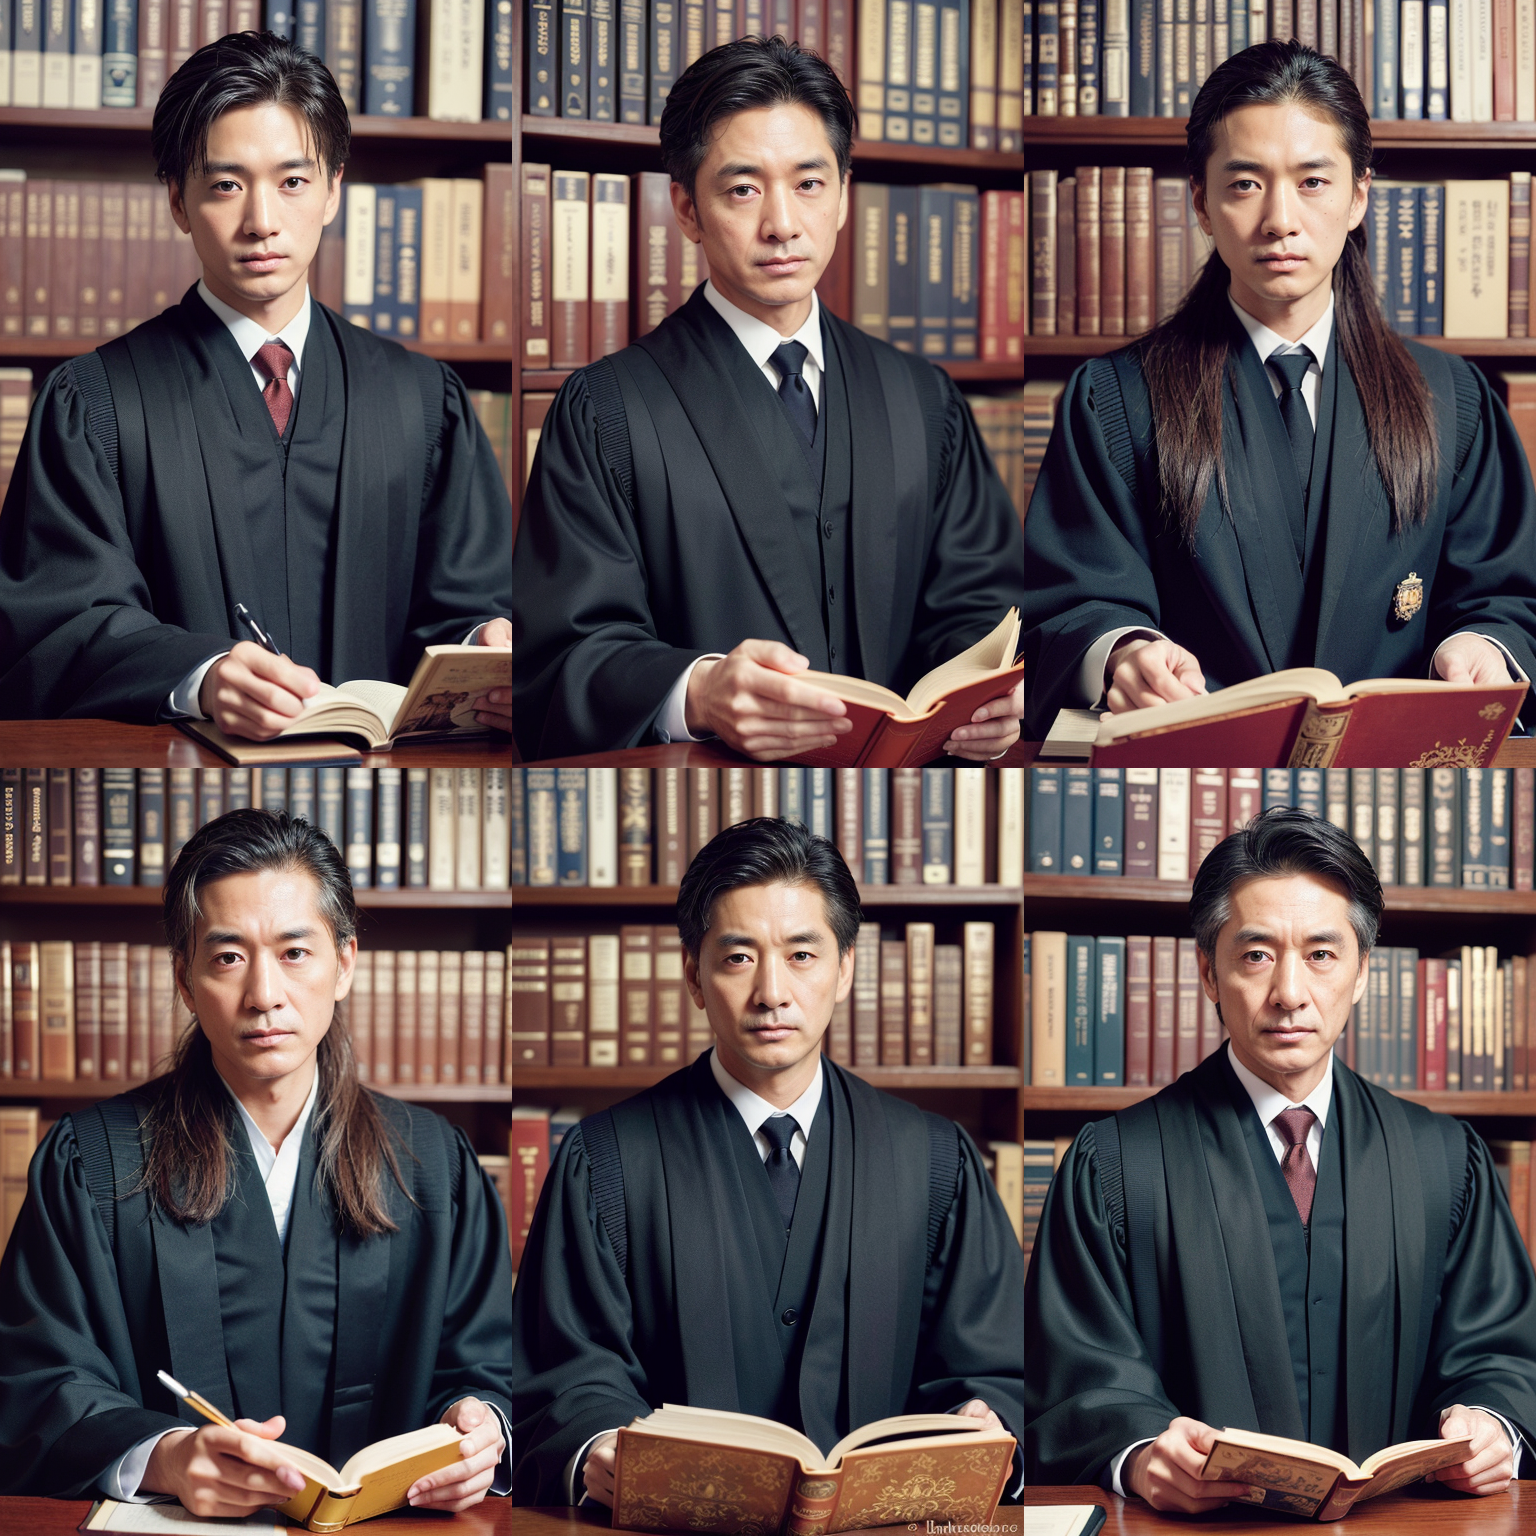 【AI繪圖】成熟的男性法官在東京大學圖書館